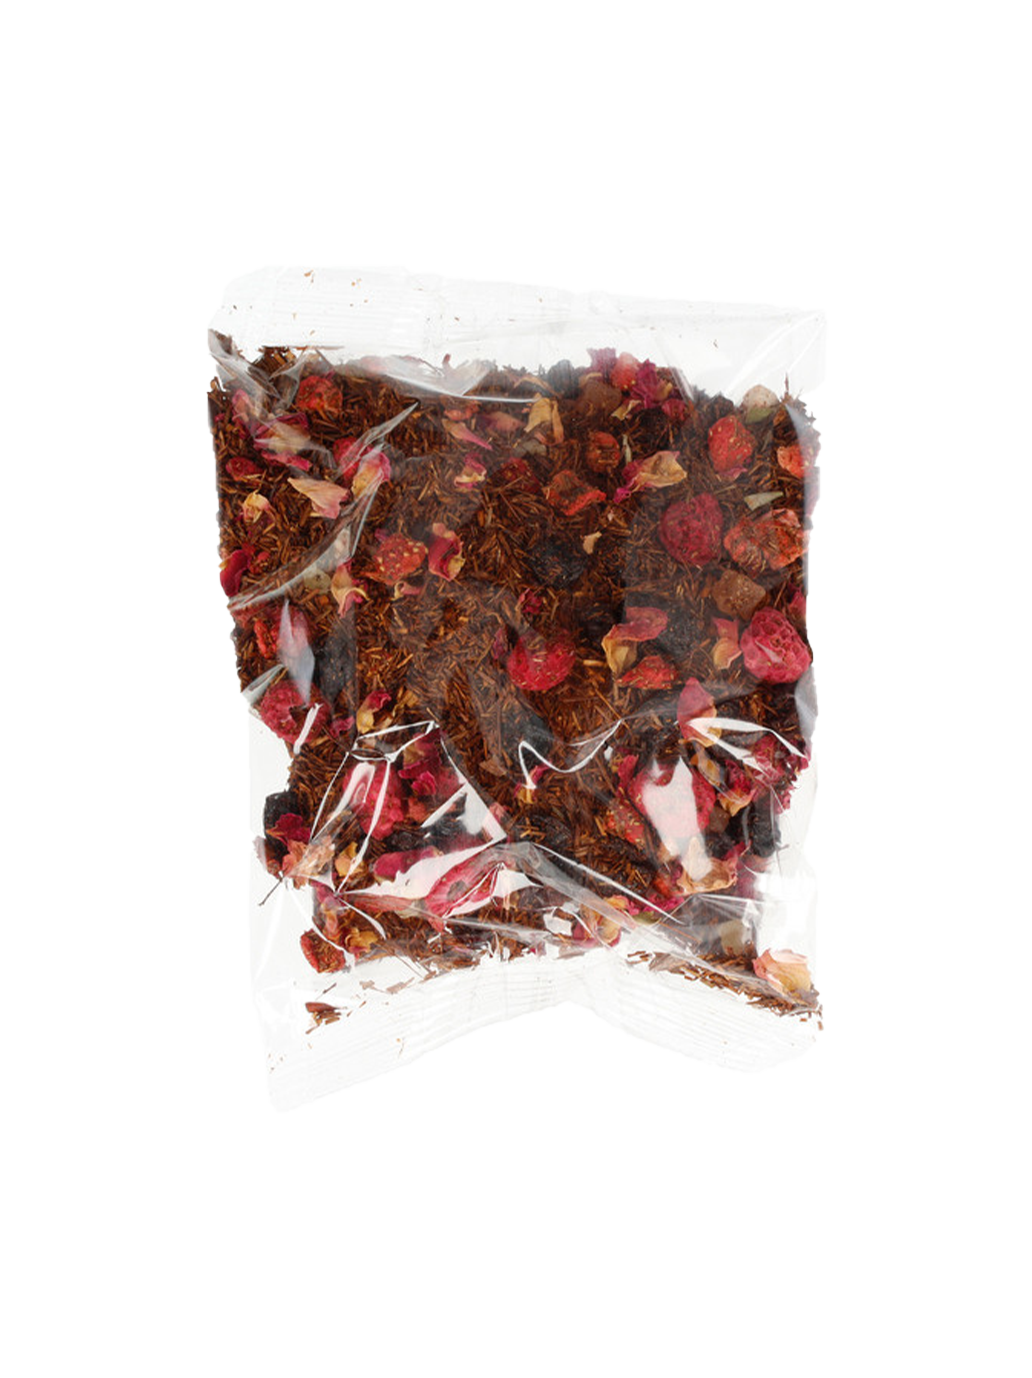 herbata sypana Moomin Rooibos Red Berries